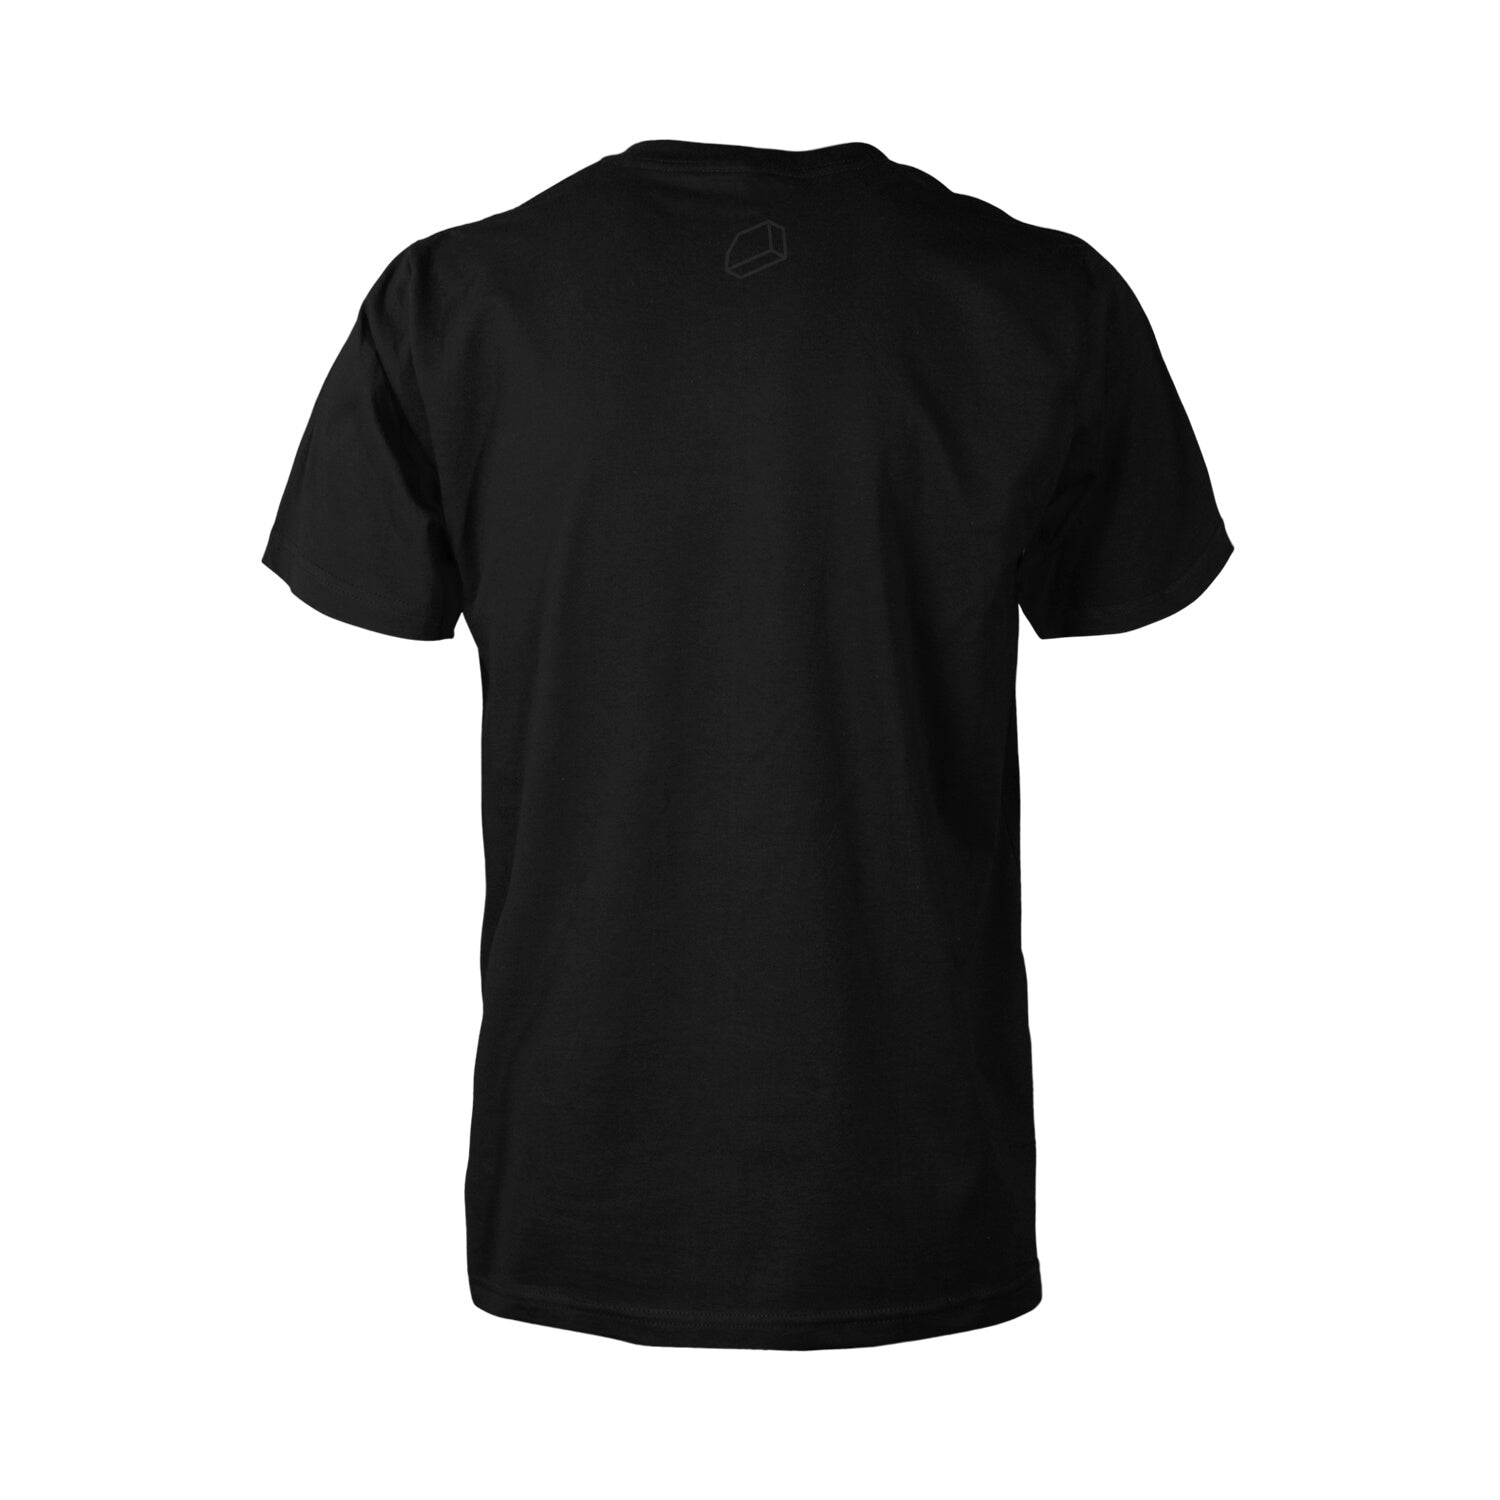 Limitovaná edice 25 let Stealth tričko (Unisex)